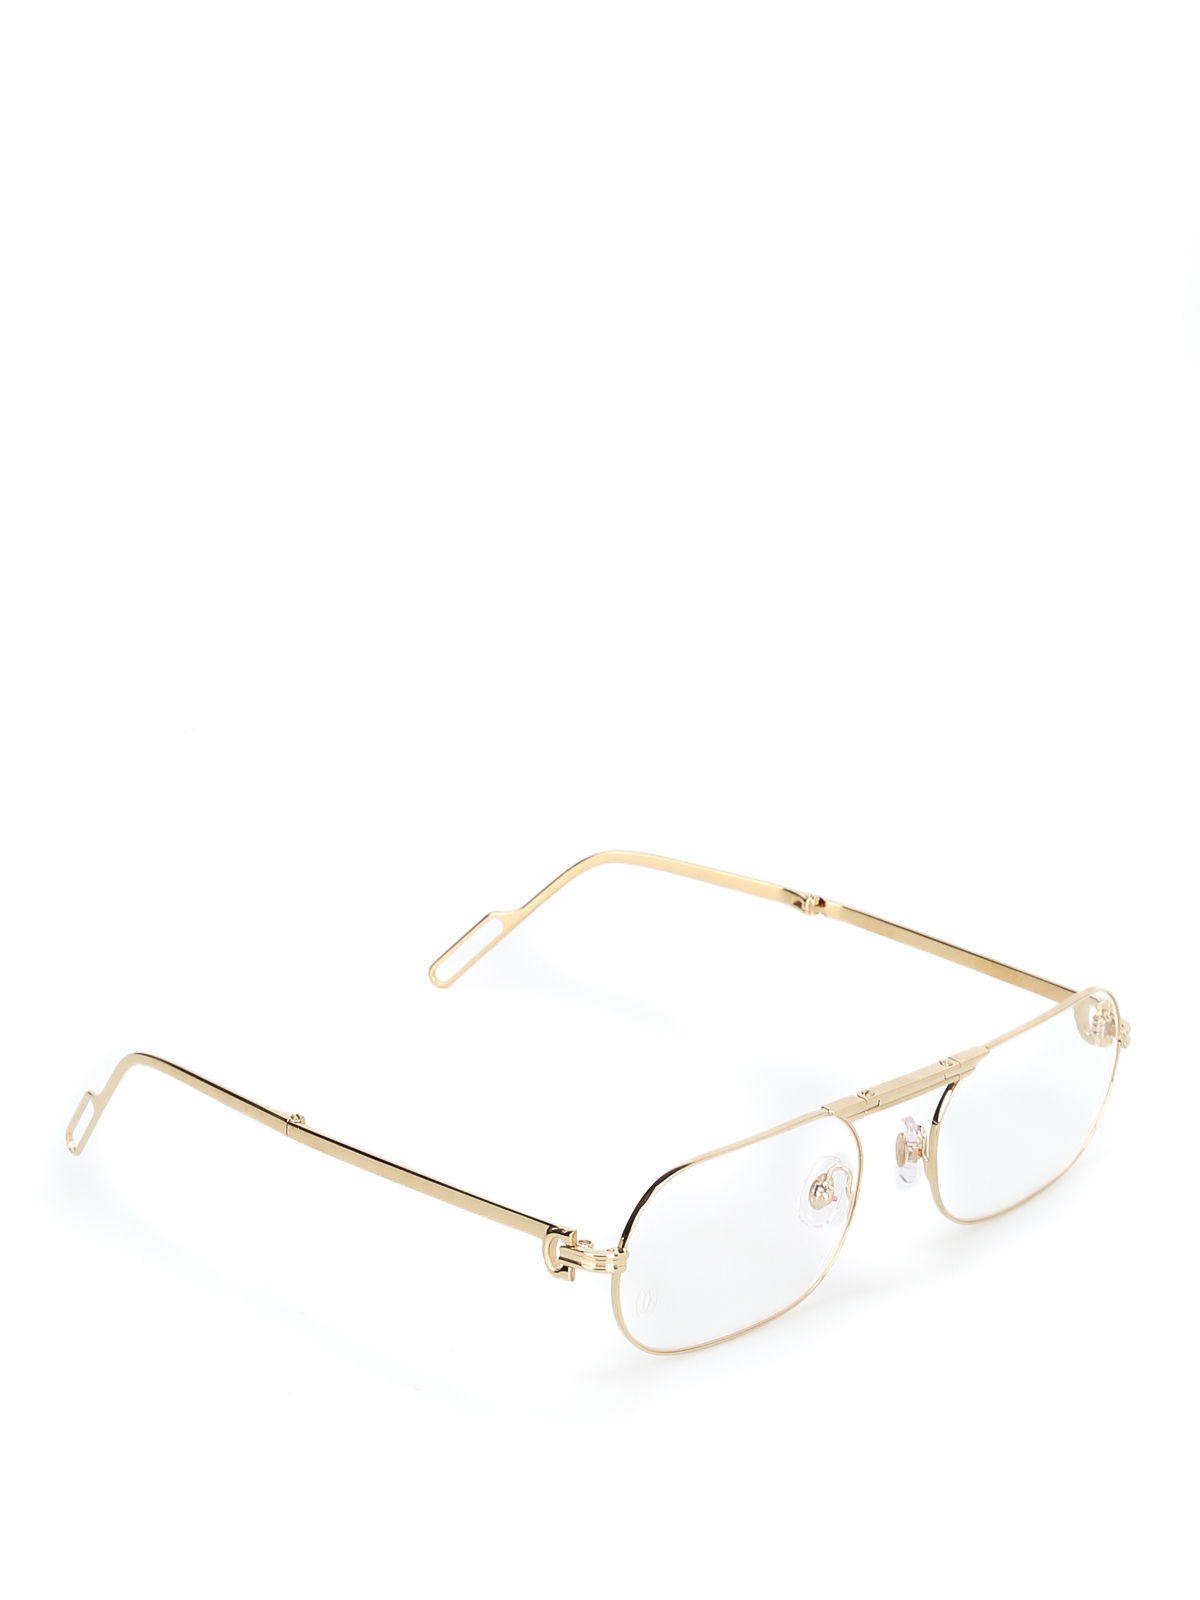 Cartier - Metal folding gold eyeglasses 